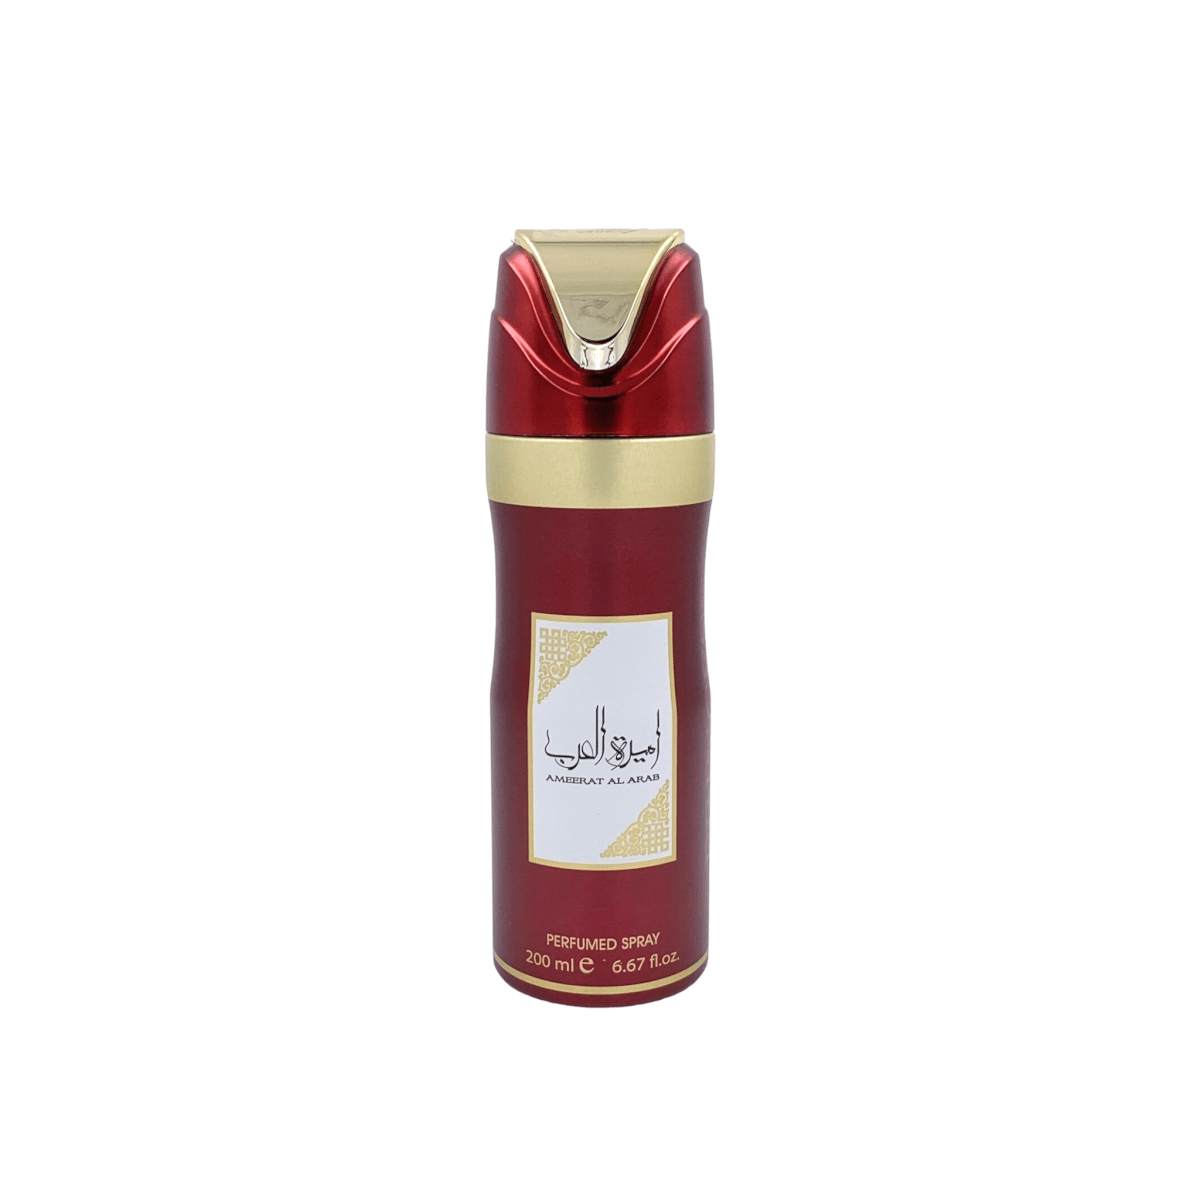 Ameerat Al Arab (Princess Of Arabia) Perfumed Spray 200Ml By Lattafa